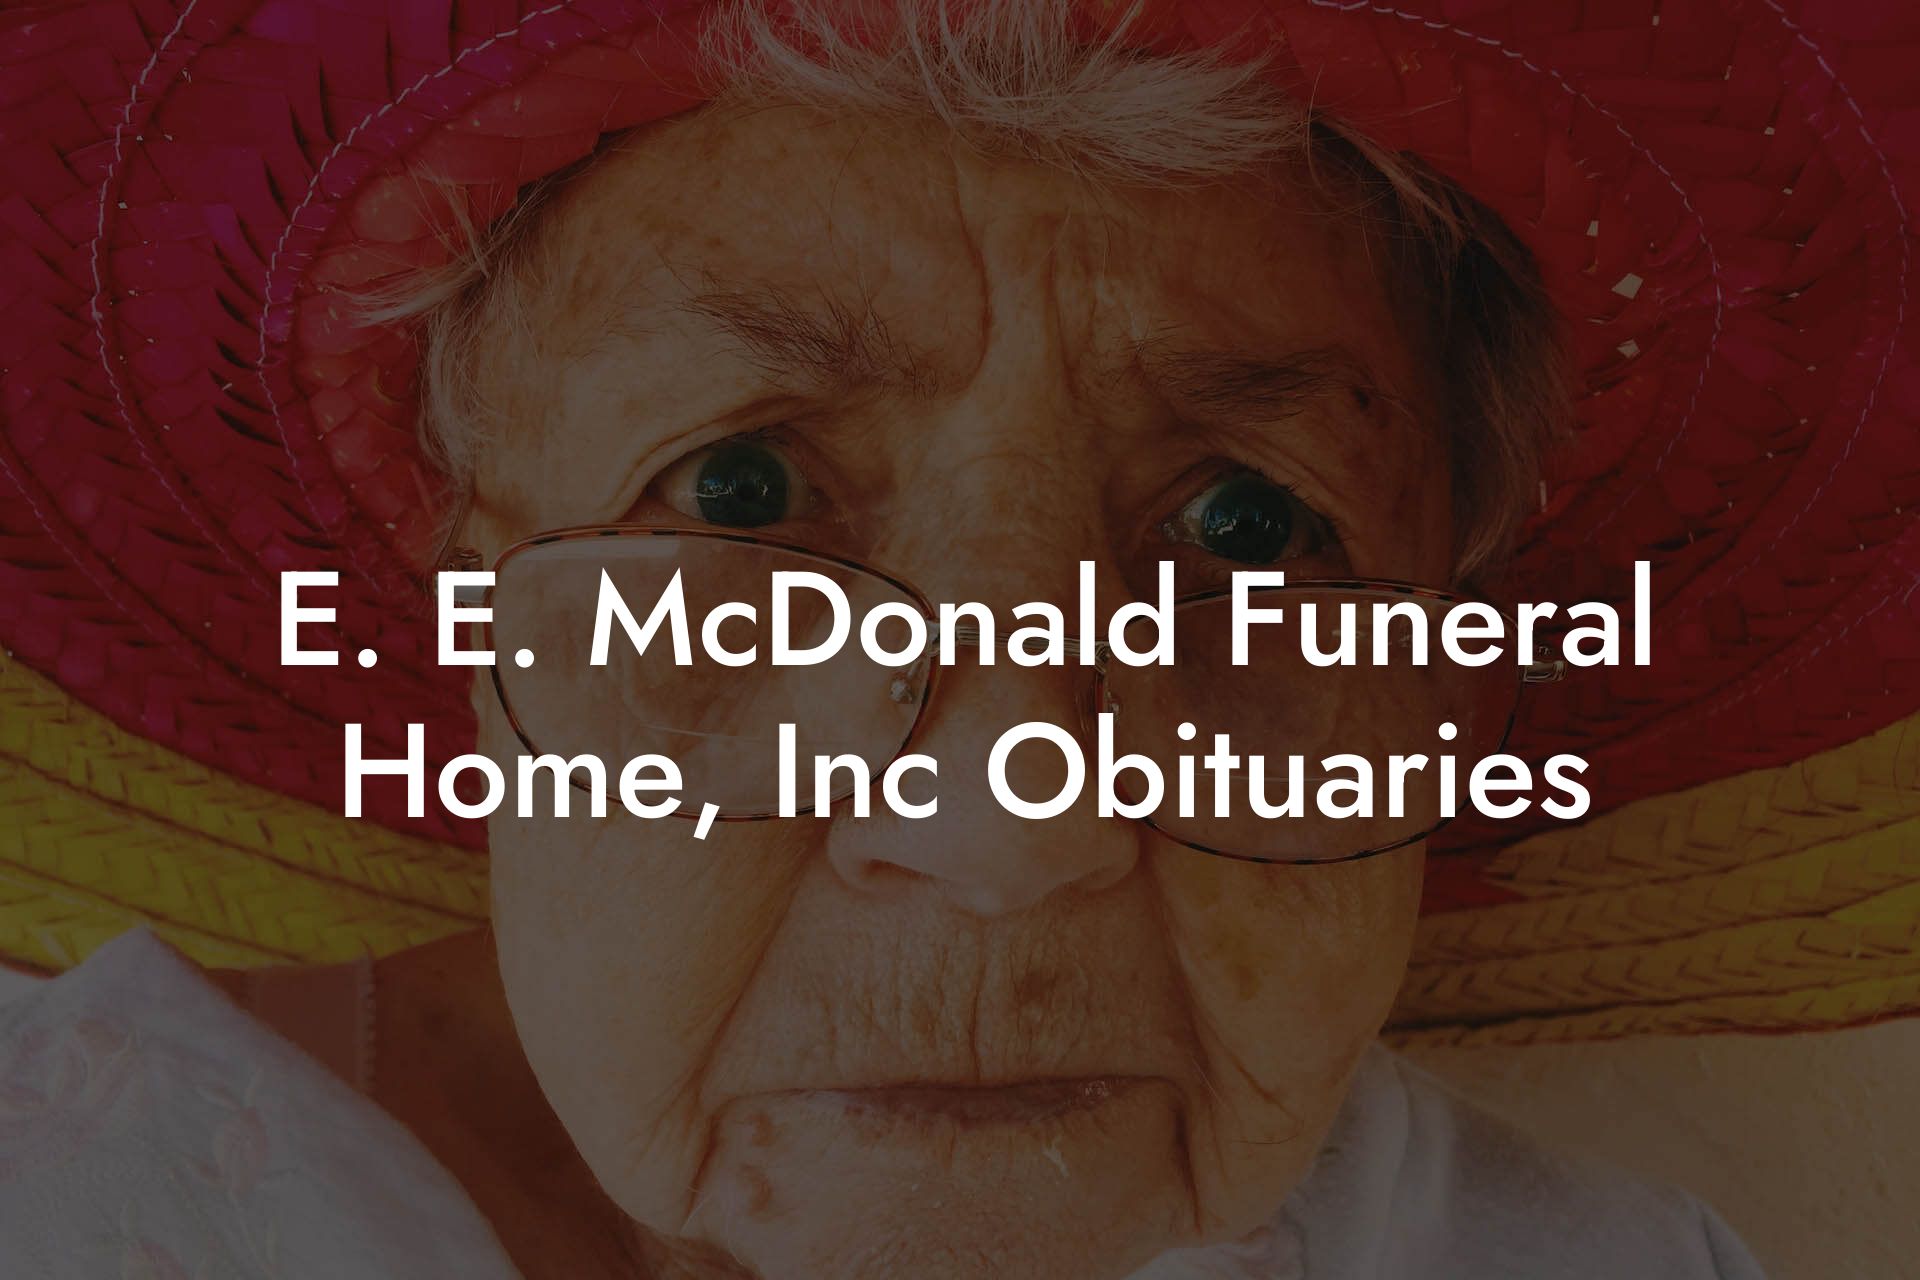 E. E. McDonald Funeral Home, Inc Obituaries